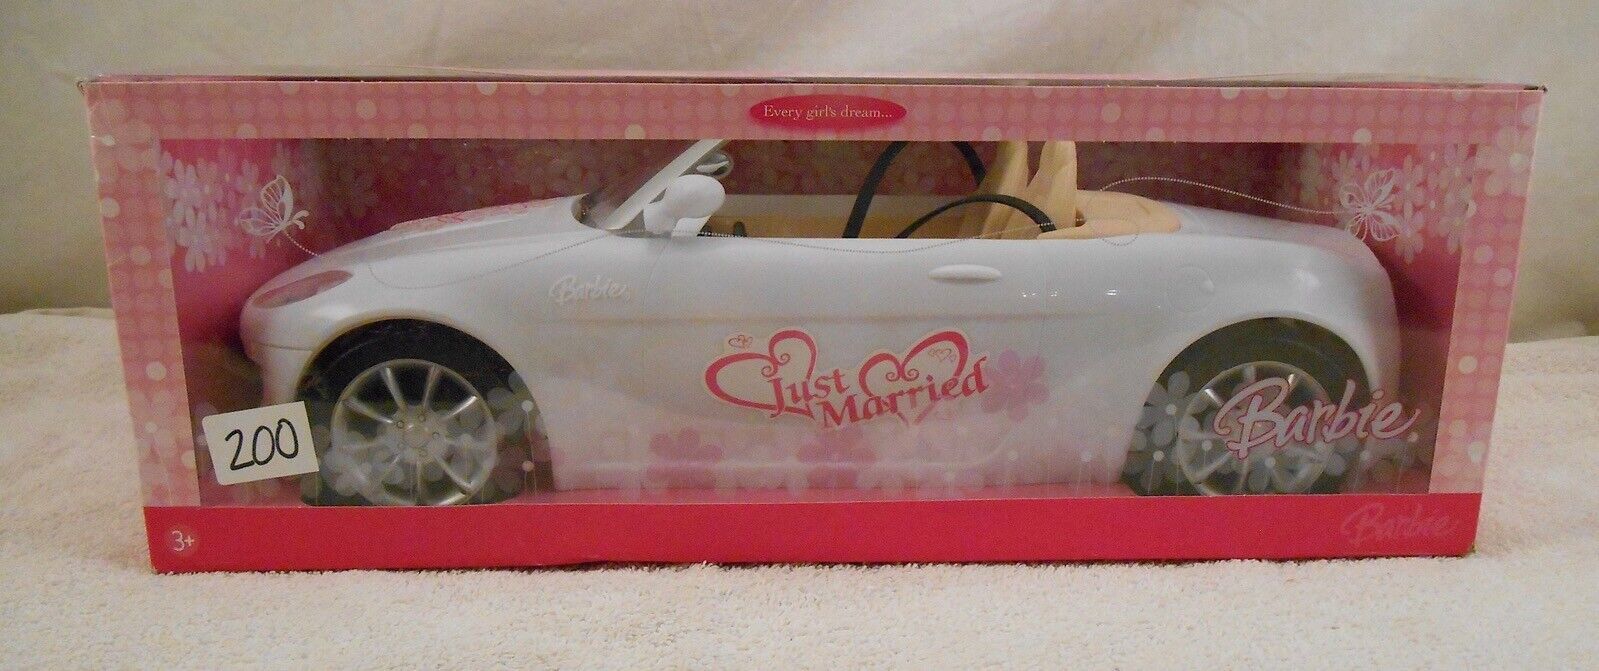 2006 Mattel Barbie Just Married Wedding Car Convertible Vehicle ( NEW ) L3831 - $186.19